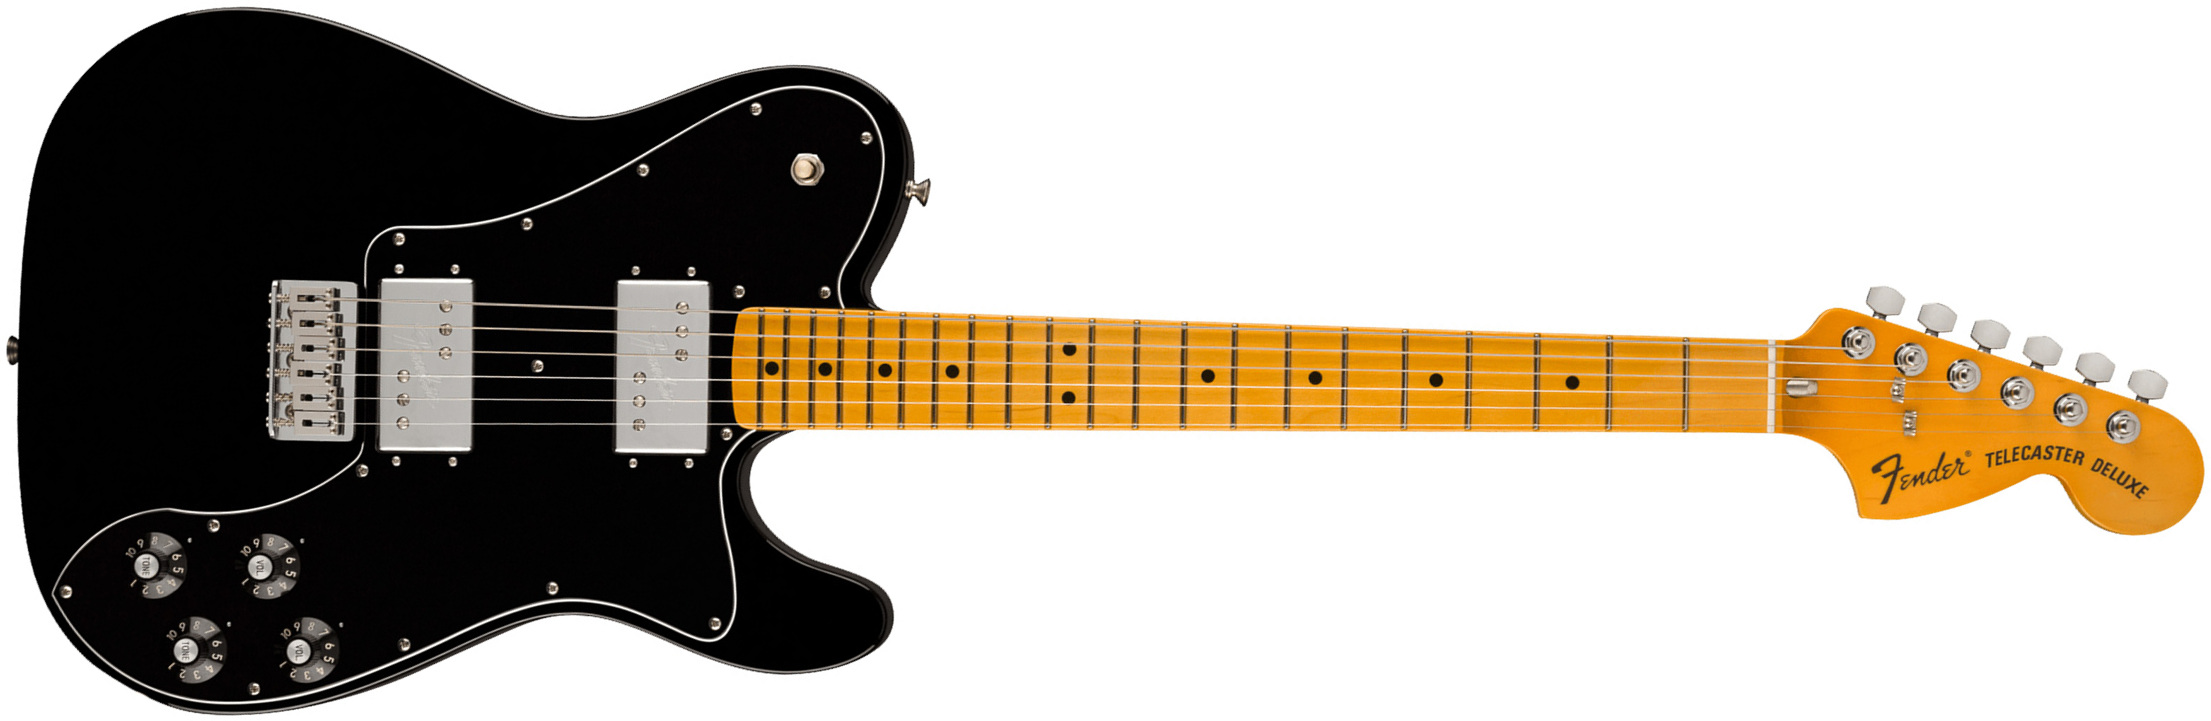 Fender Tele Deluxe 1975 American Vintage Ii Usa 2h Ht Mn - Black - Guitare Électrique Forme Tel - Main picture